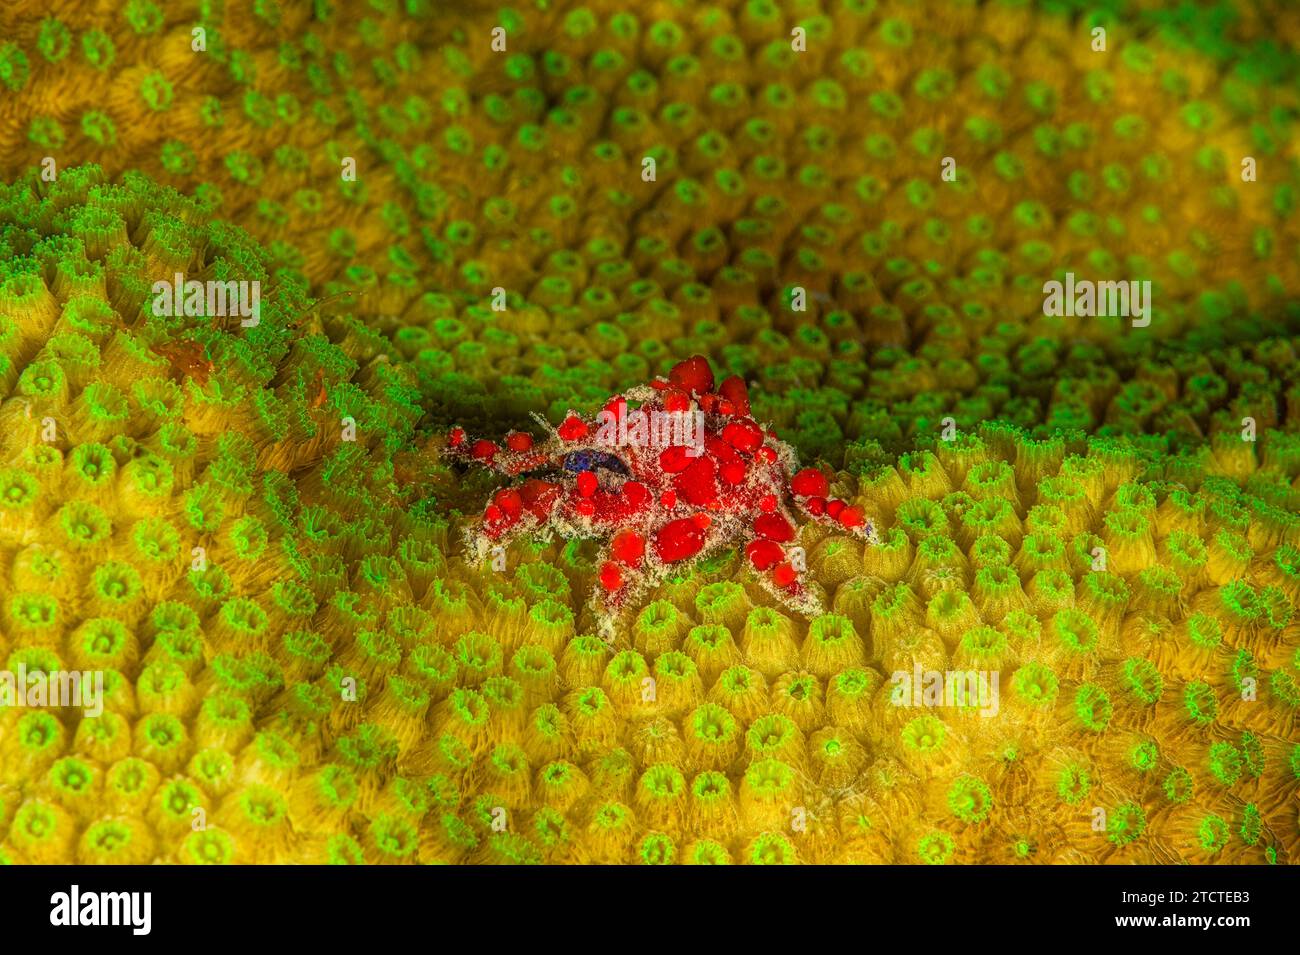 Cryptic teardrop crab (Pelia mutica) on coral, Bonaire, Caribbean Sea Stock Photo